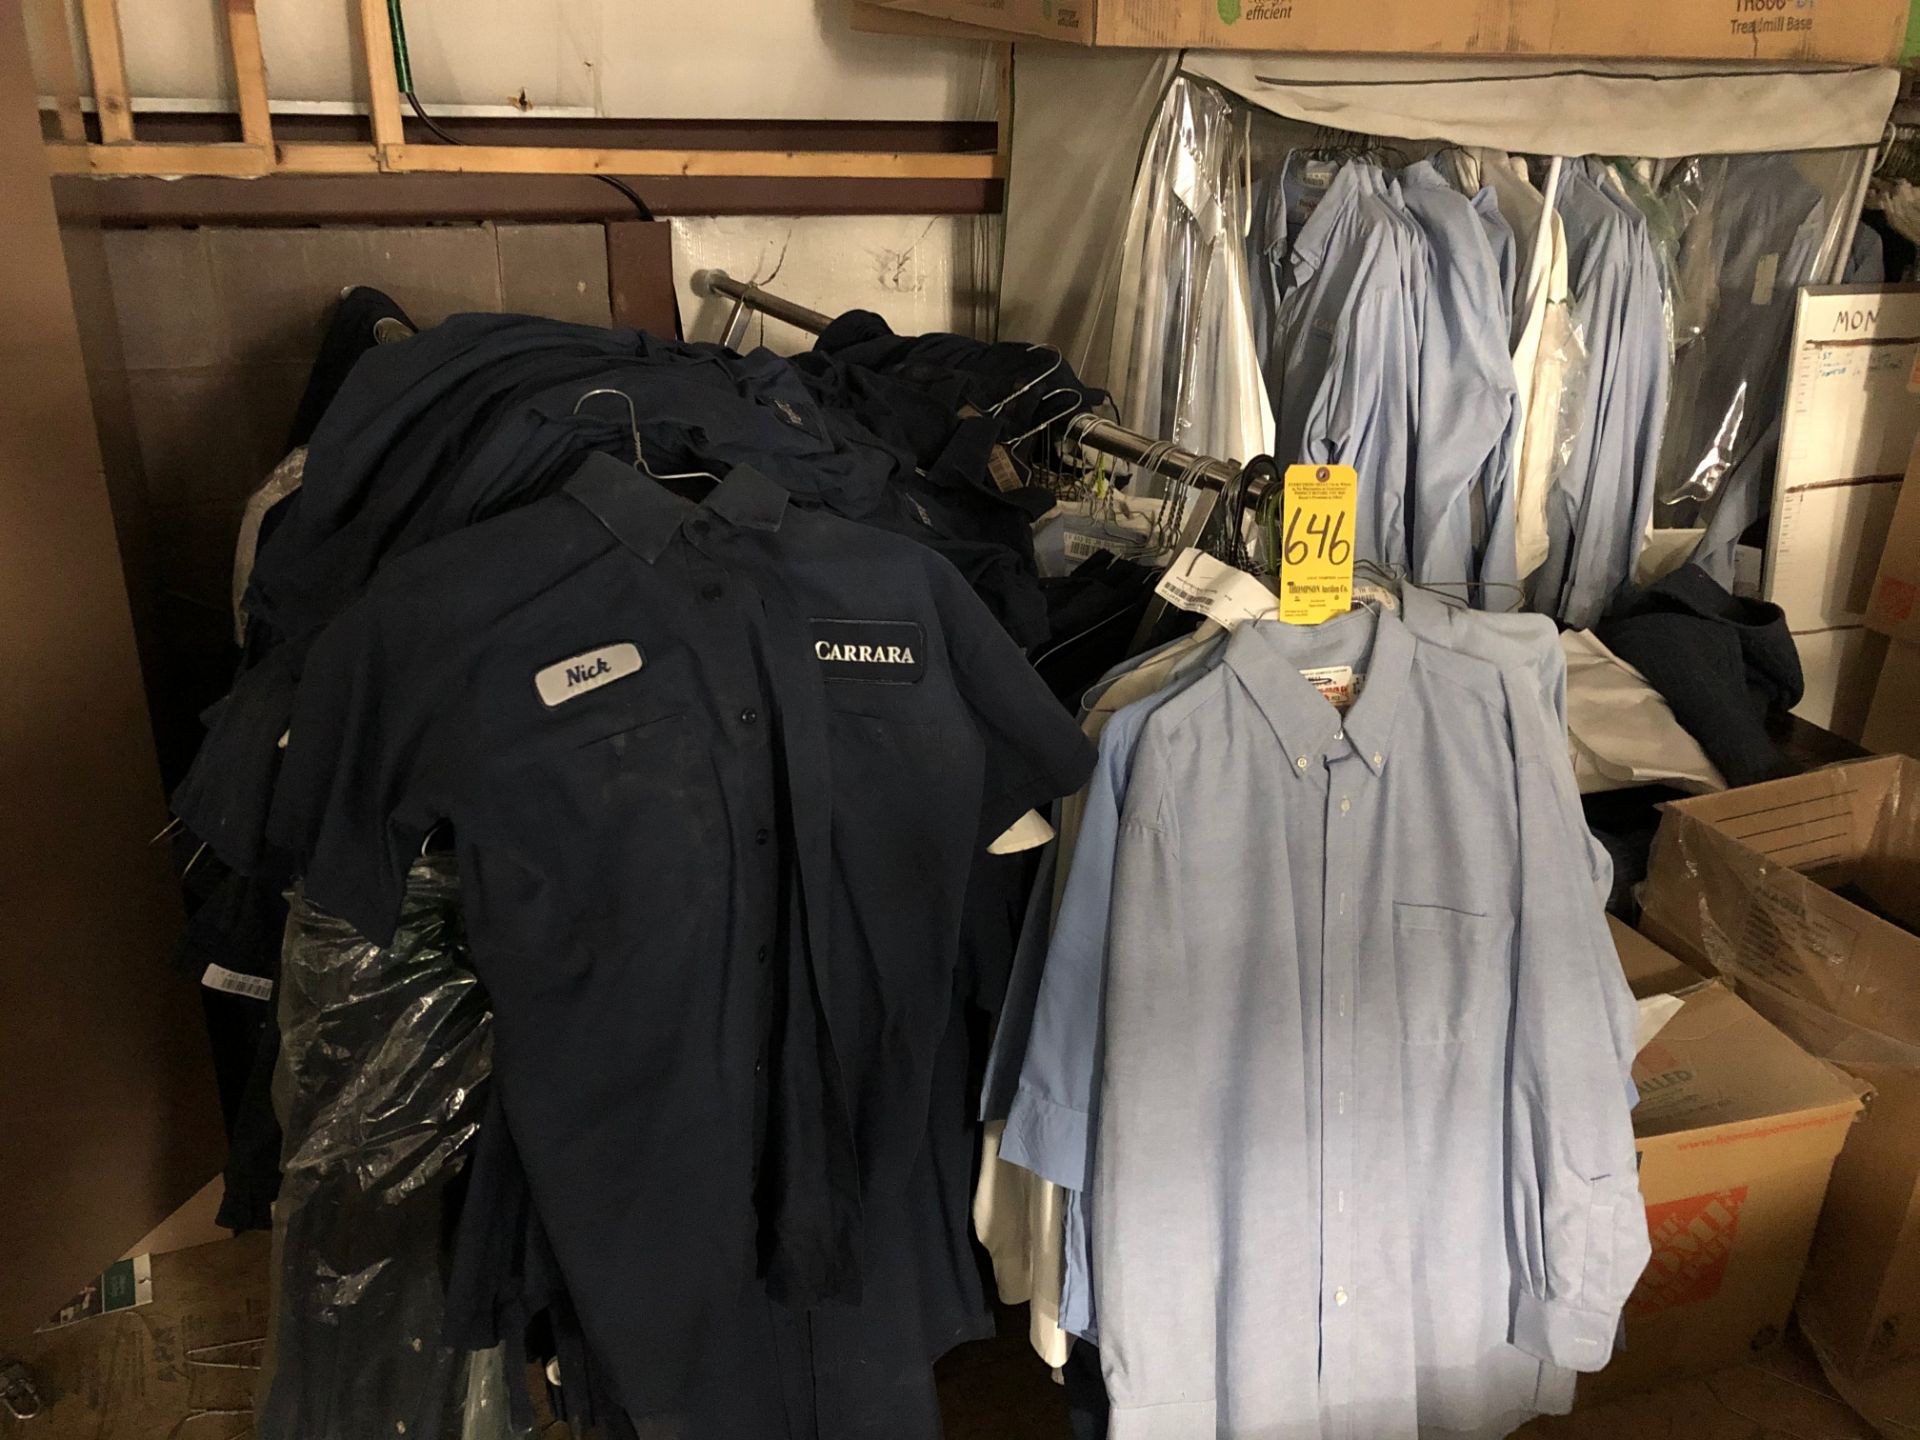 Work Shirts, (4) Clothing Racks